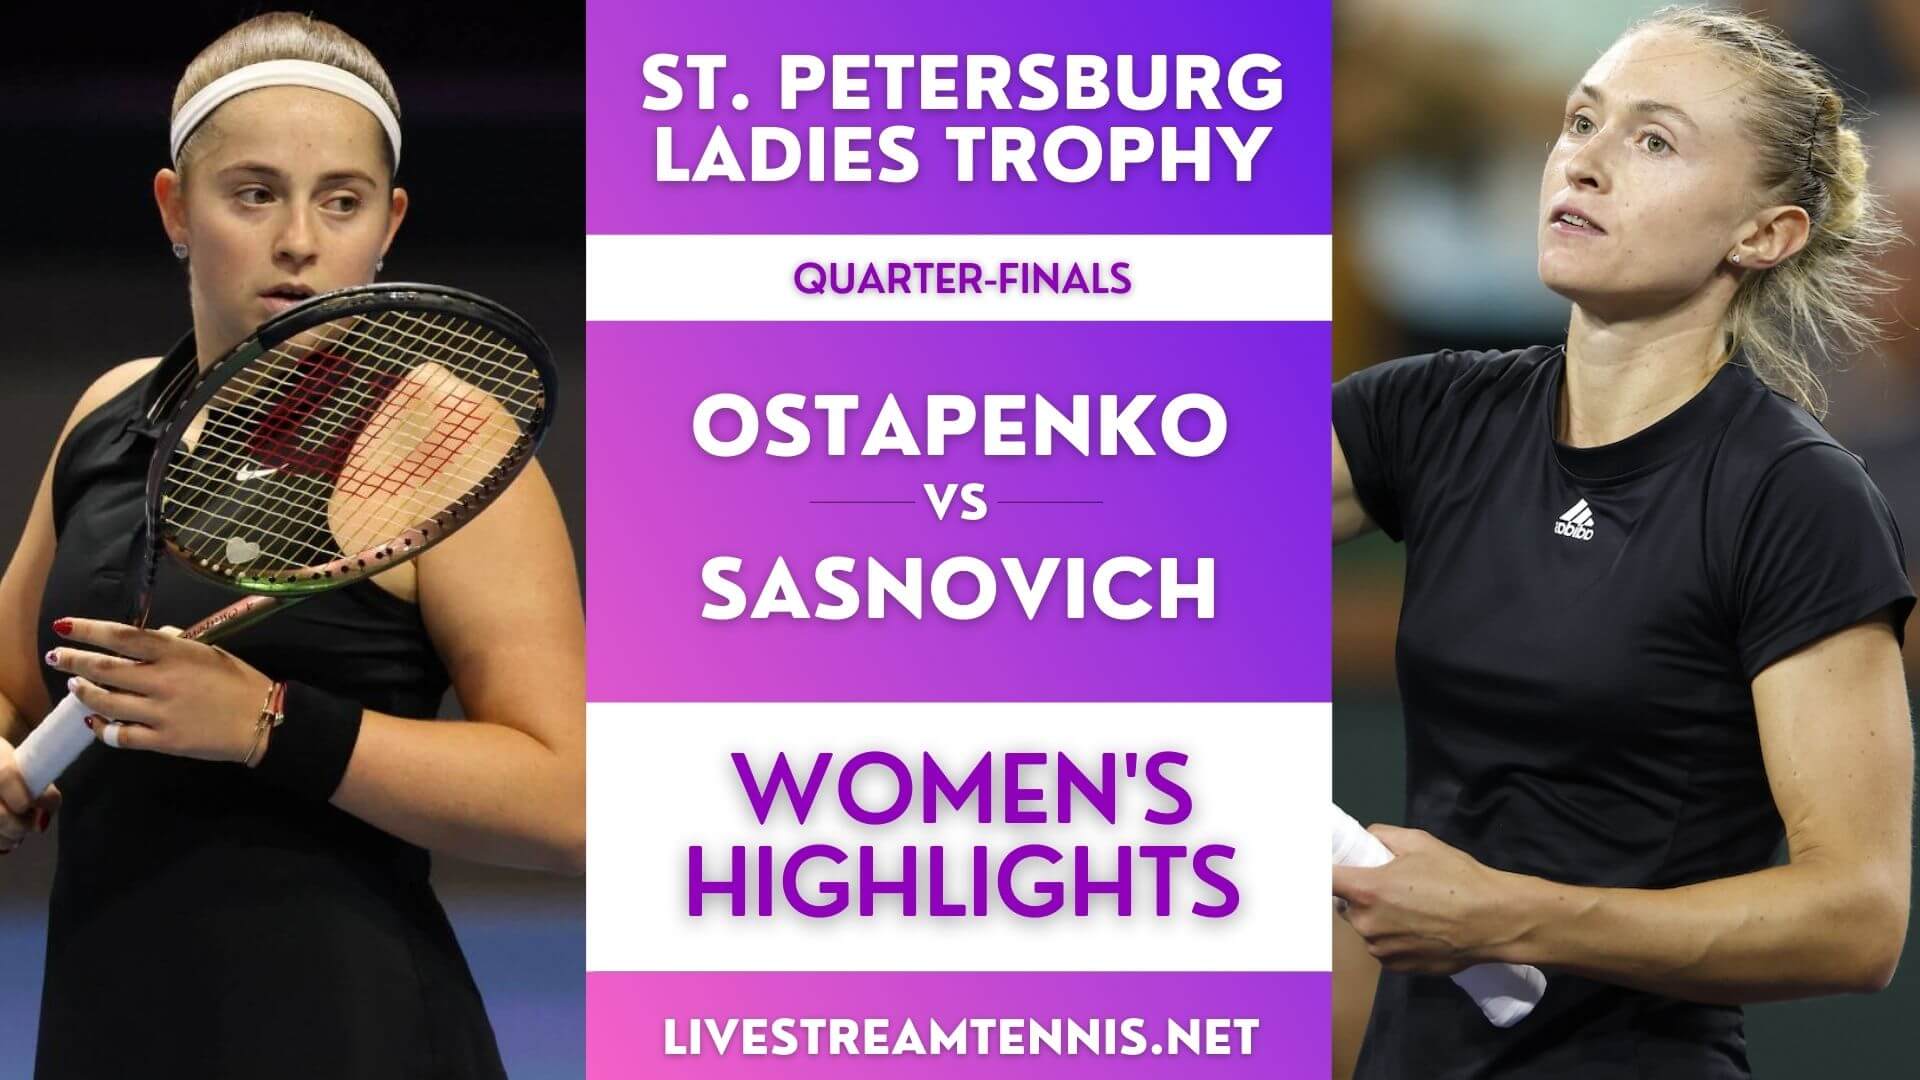 Ladies Trophy WTA Quarter Final 2 Highlights 2022